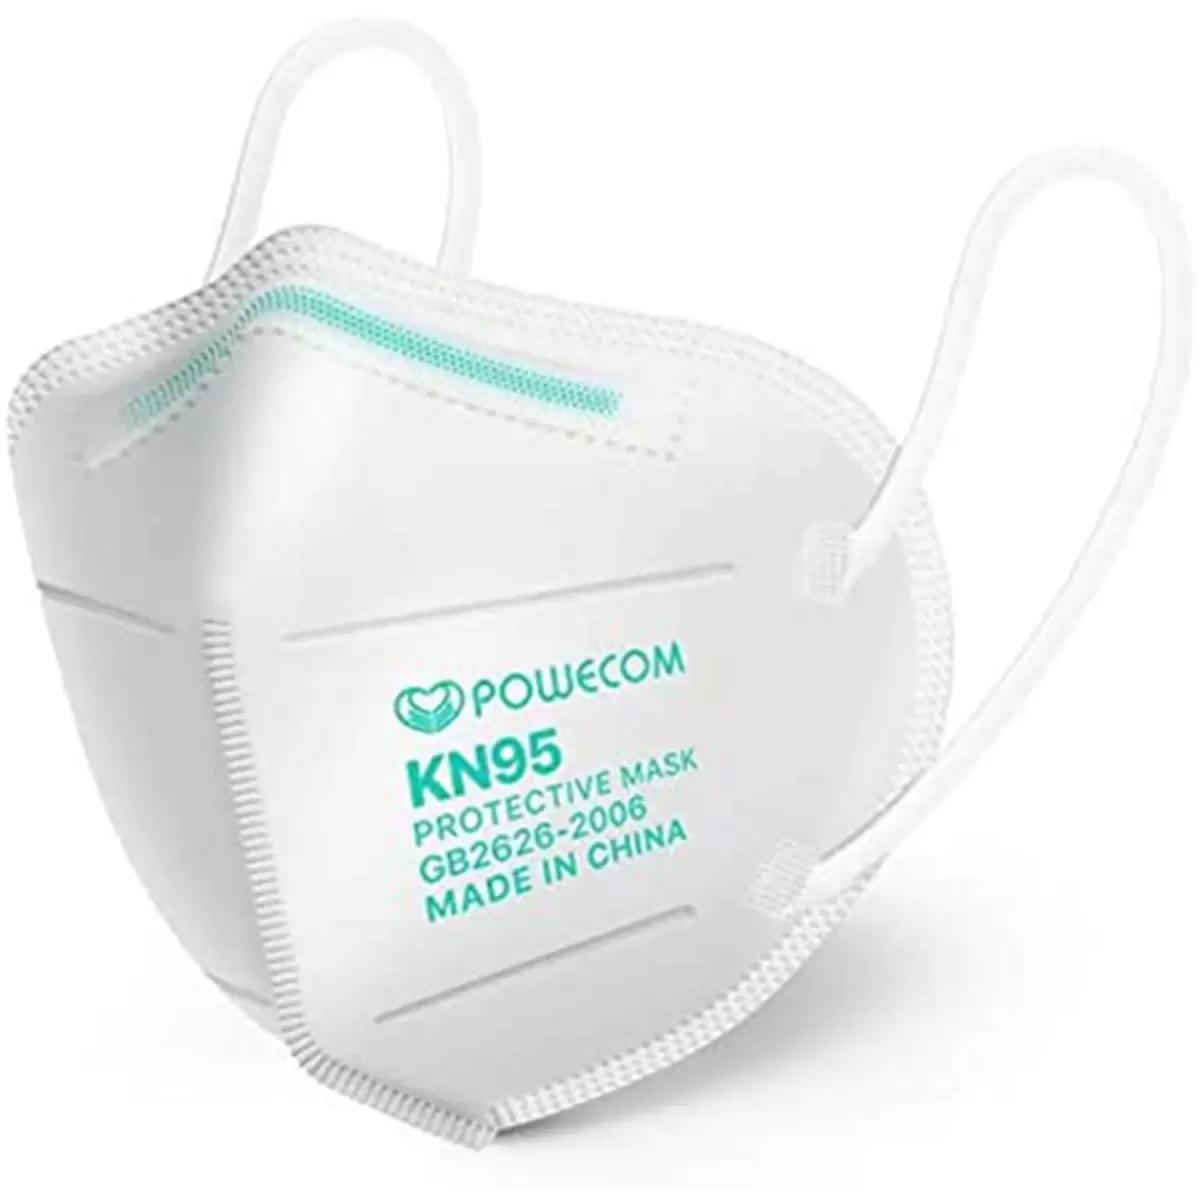 10 Powecom KN95 Respirator Ear Loop Mask for $9.75 Shipped